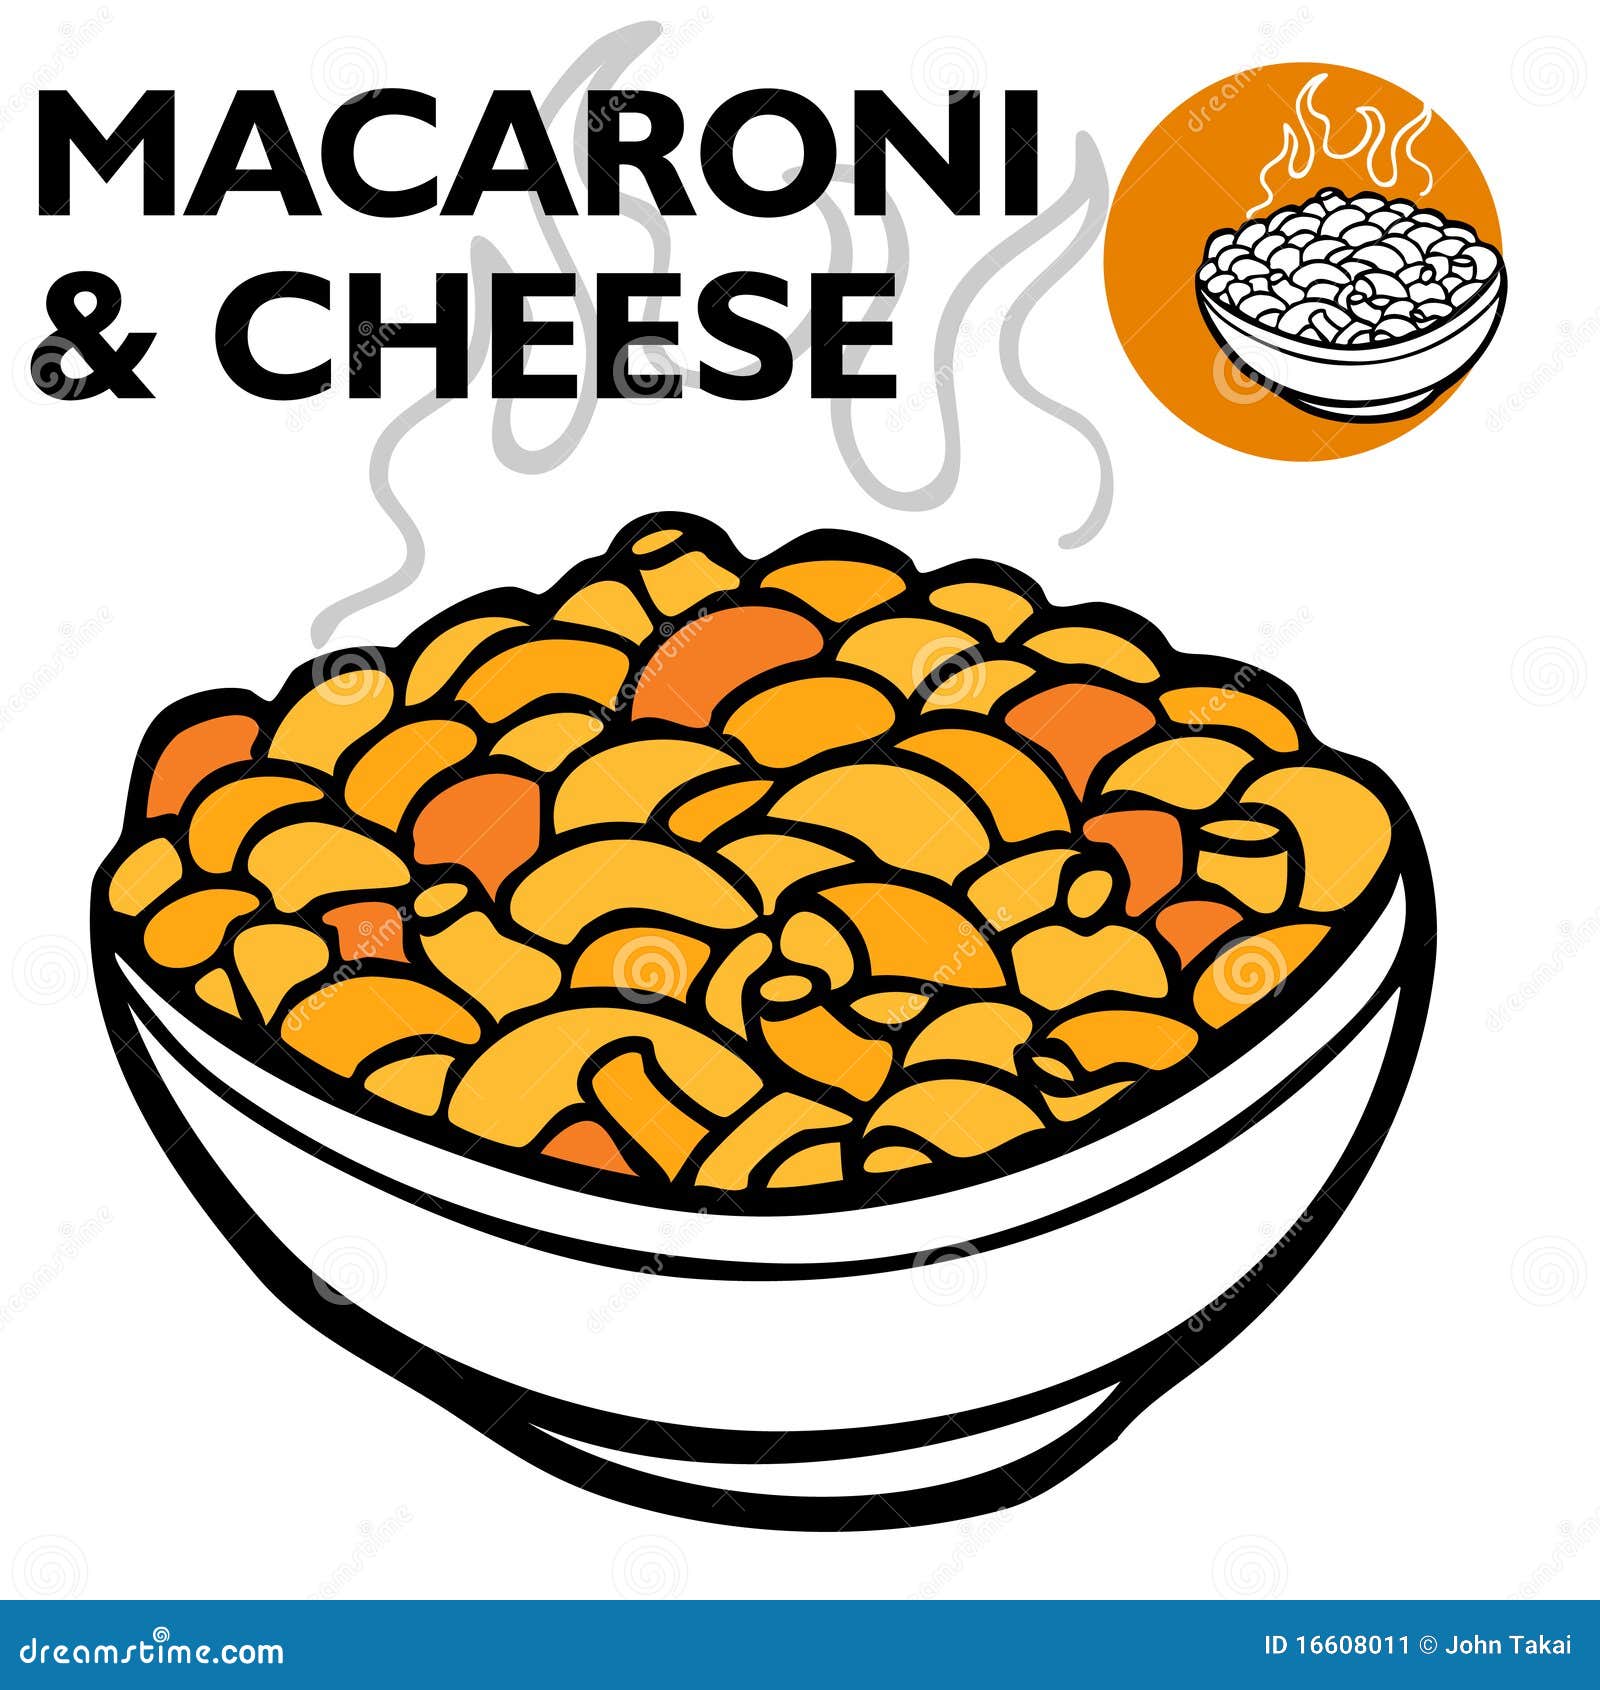 Macaroni And Cheese Stock Image - Image: 16608011